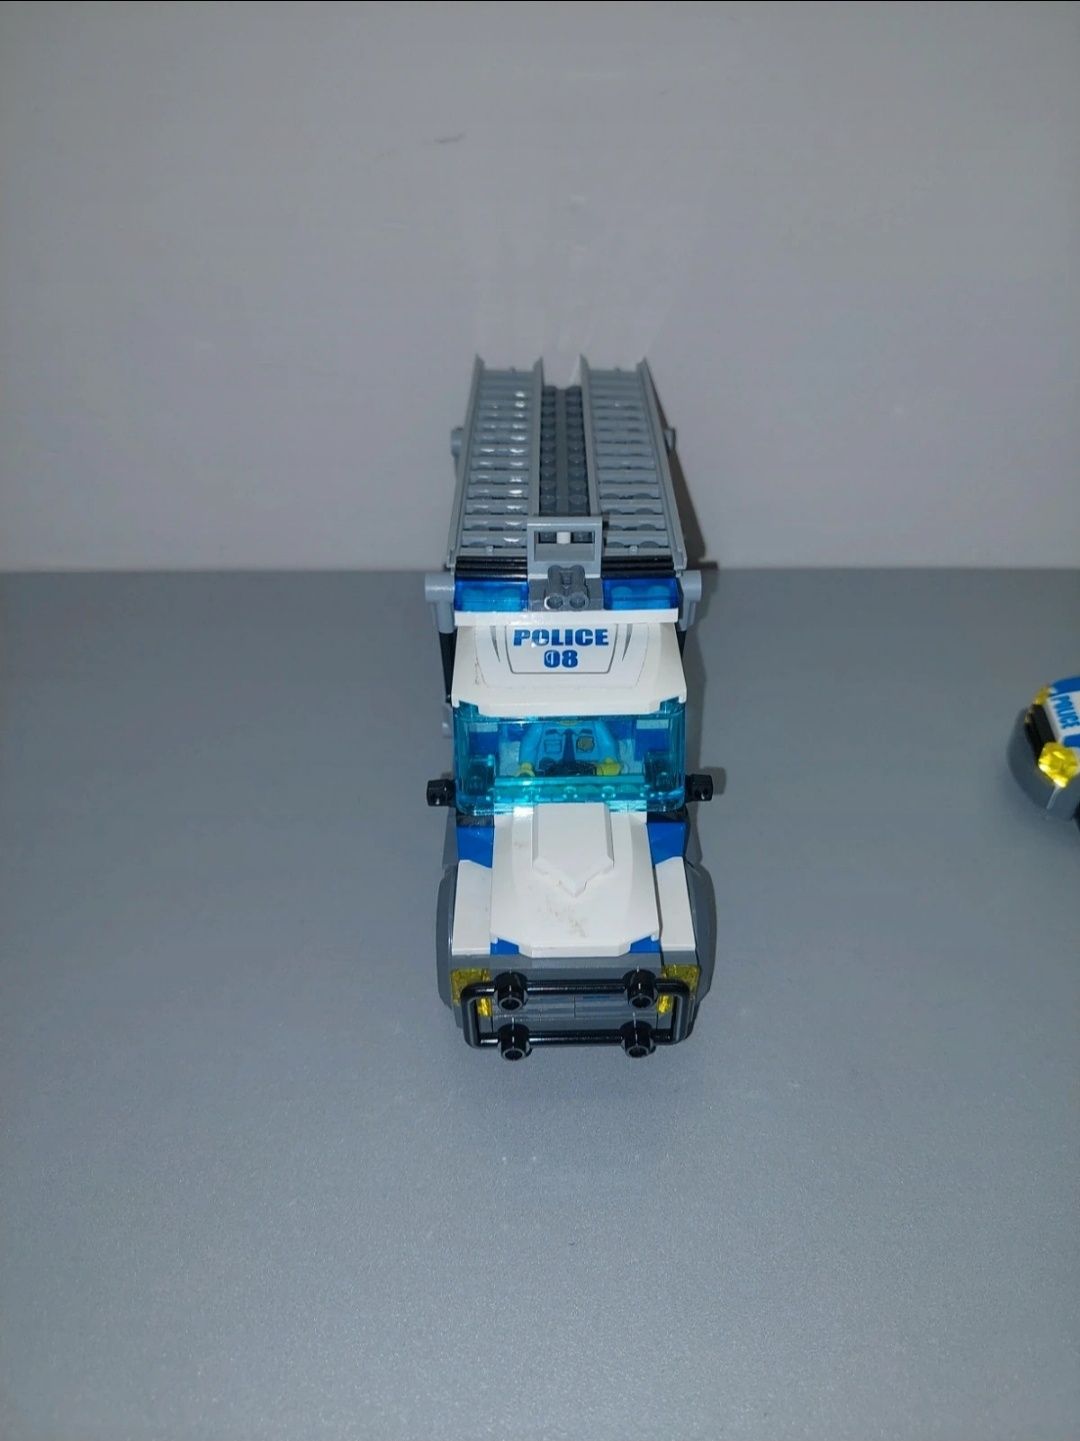 LEGO CITY policja police pościg 60143 skok na transporter